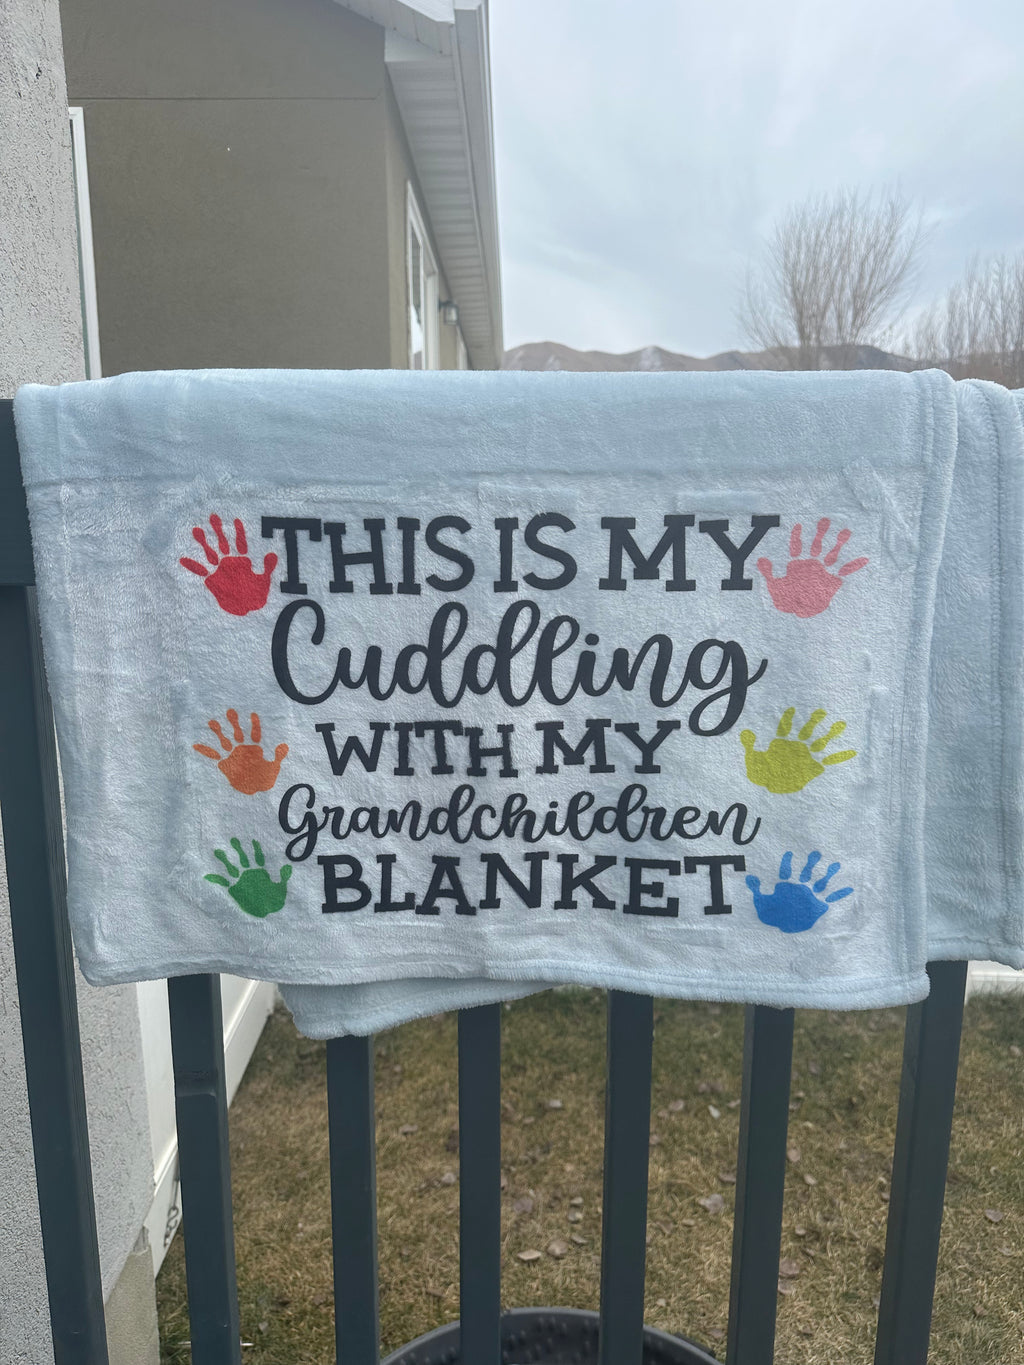 This is my cuddling with my grandchildren blanket